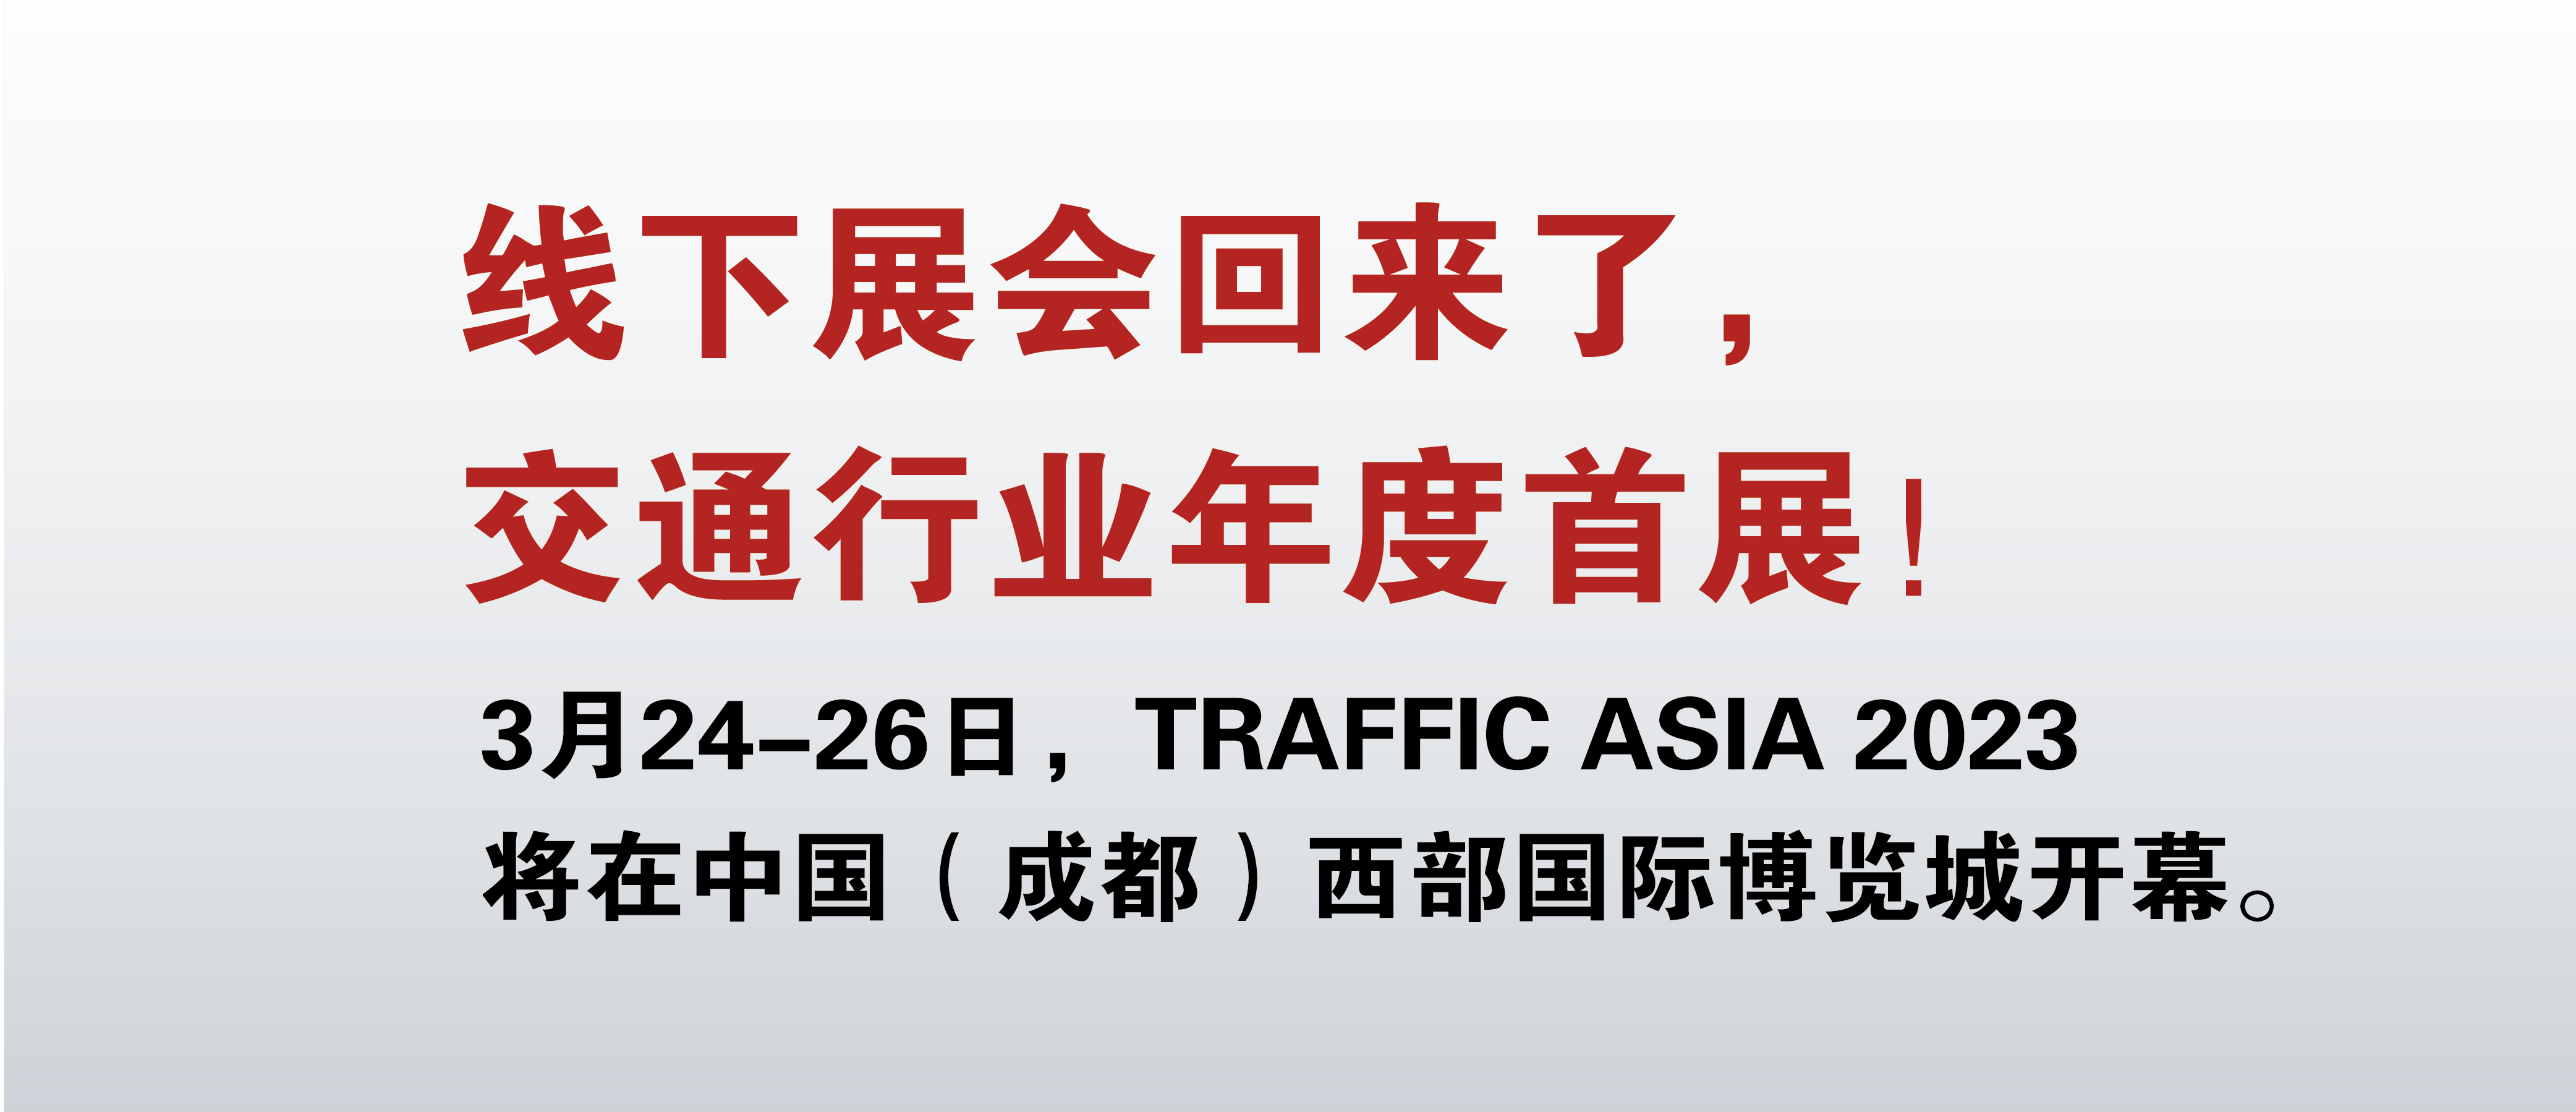 TRAFFIC ASIA 2023亚洲国际交通展将于3月24-26日在成都隆重举办！